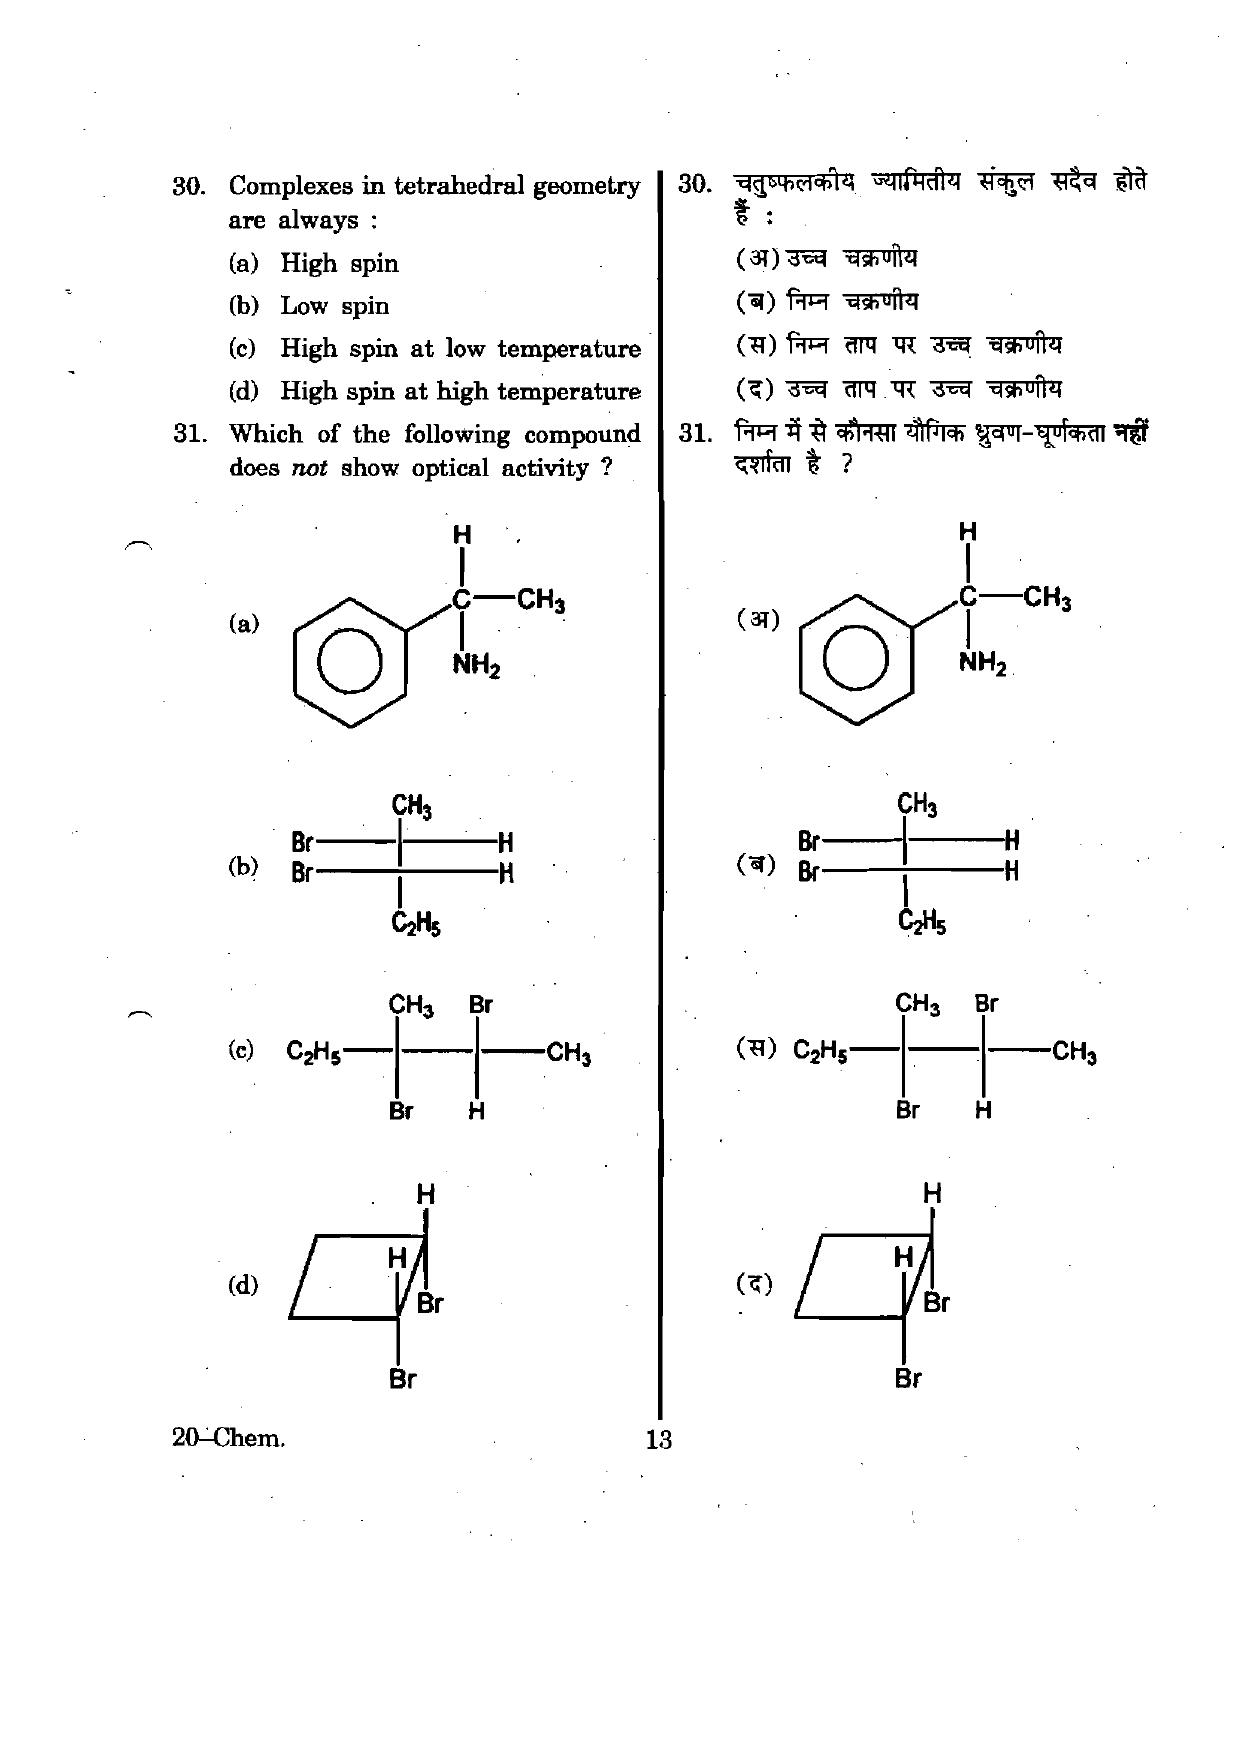 URATPG Chemistry 2012 Question Paper - Page 13